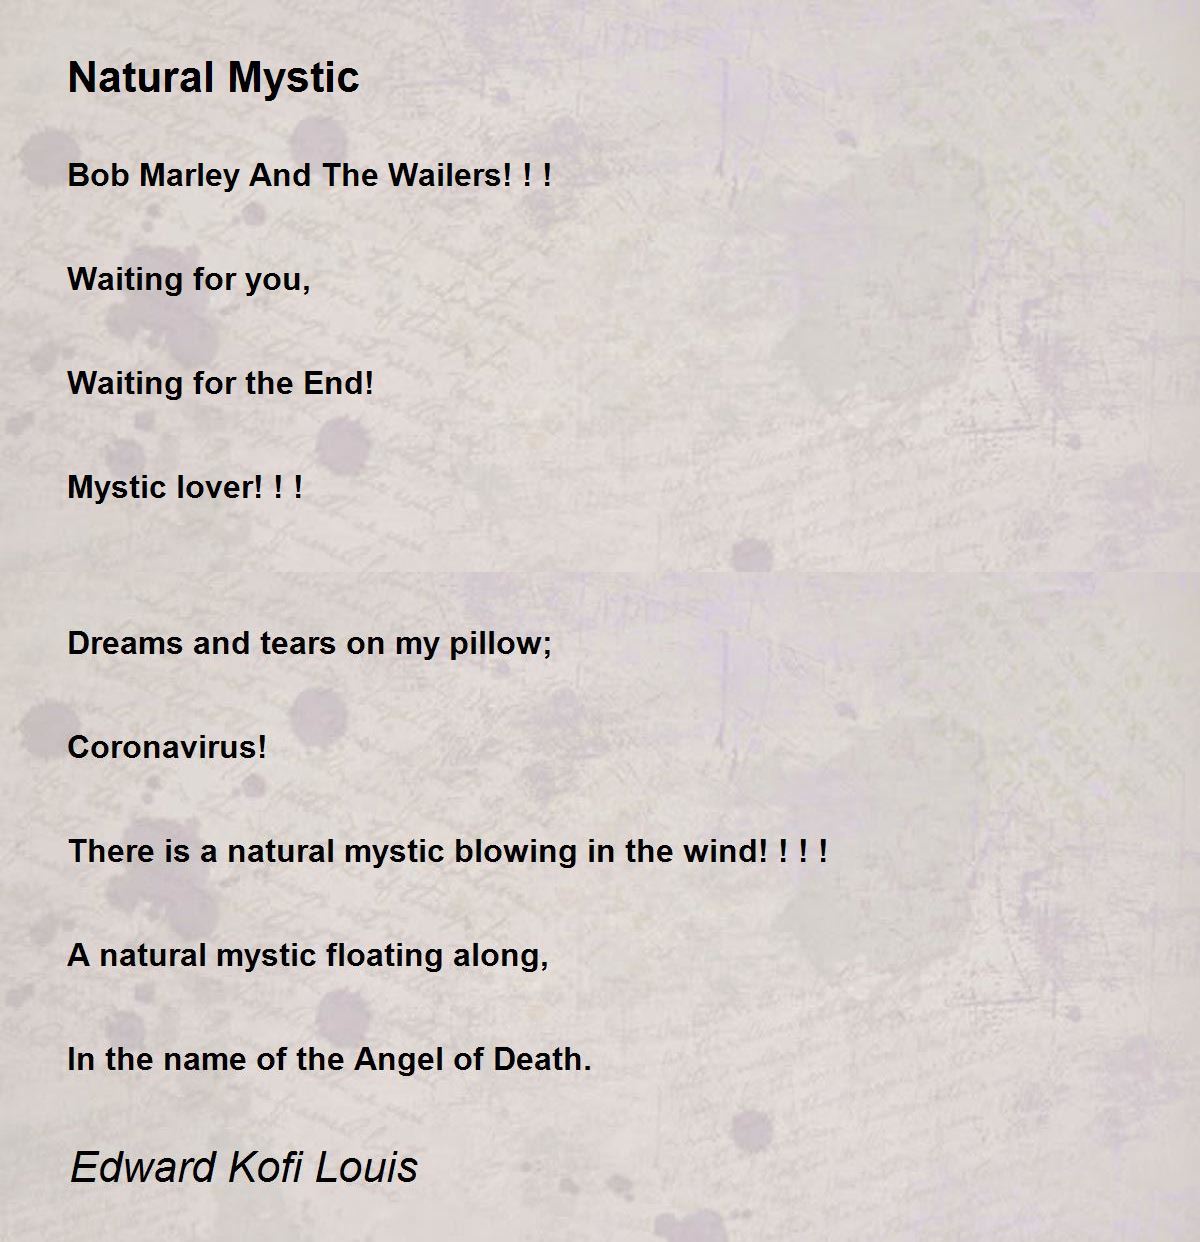 Natural Mystic - Natural Mystic Poem by Edward Kofi Louis